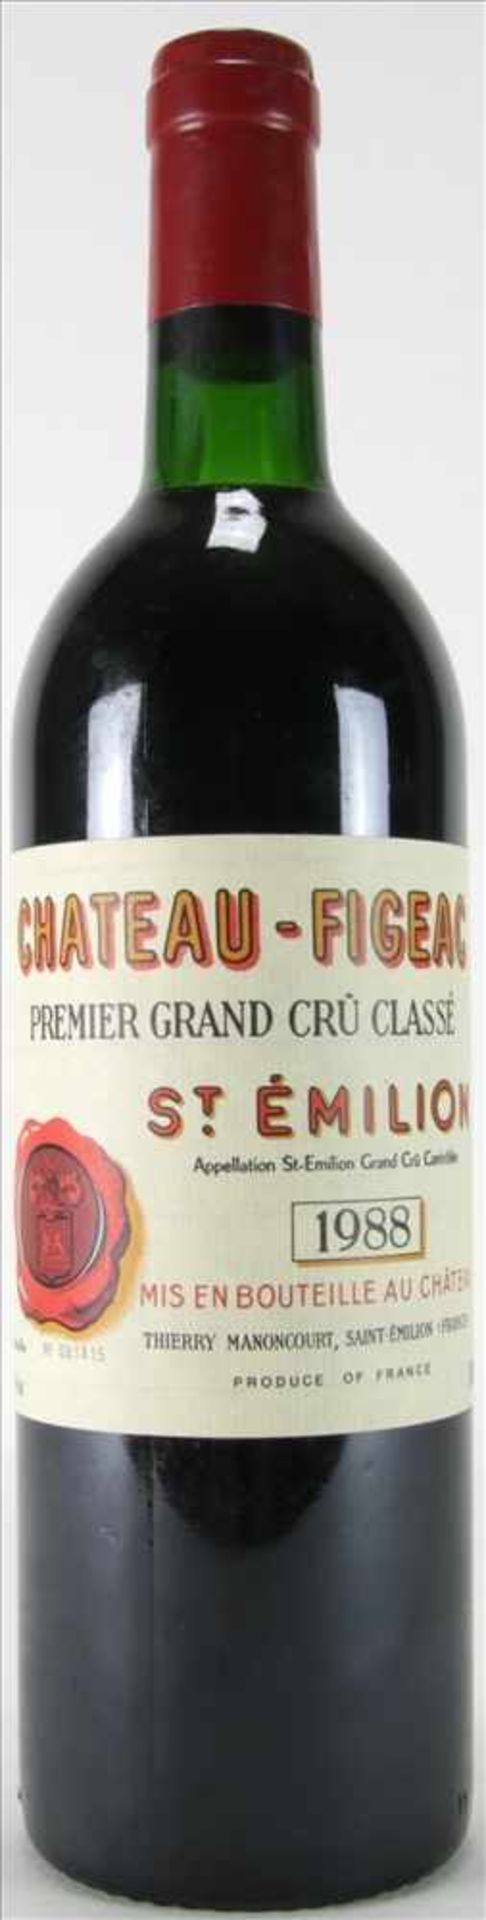 Chateau Figeac 19880,75 Liter Flasche. Füllstand Anfang Hals wie abgebildet. Süddeutsche